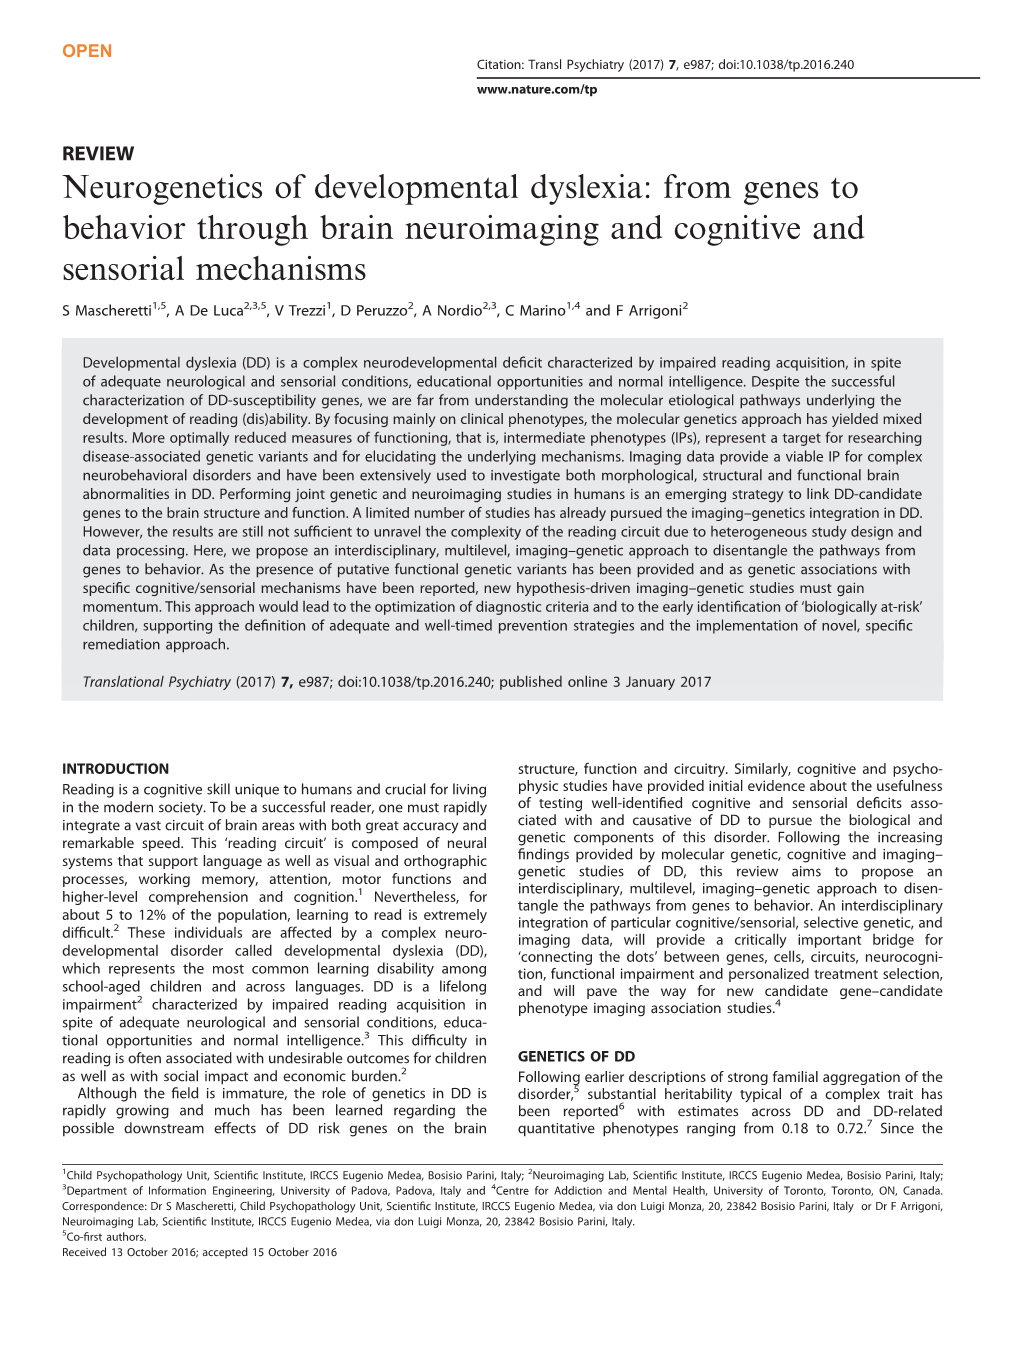 Neurogenetics of Developmental Dyslexia: from Genes to Behavior Through Brain Neuroimaging and Cognitive and Sensorial Mechanisms